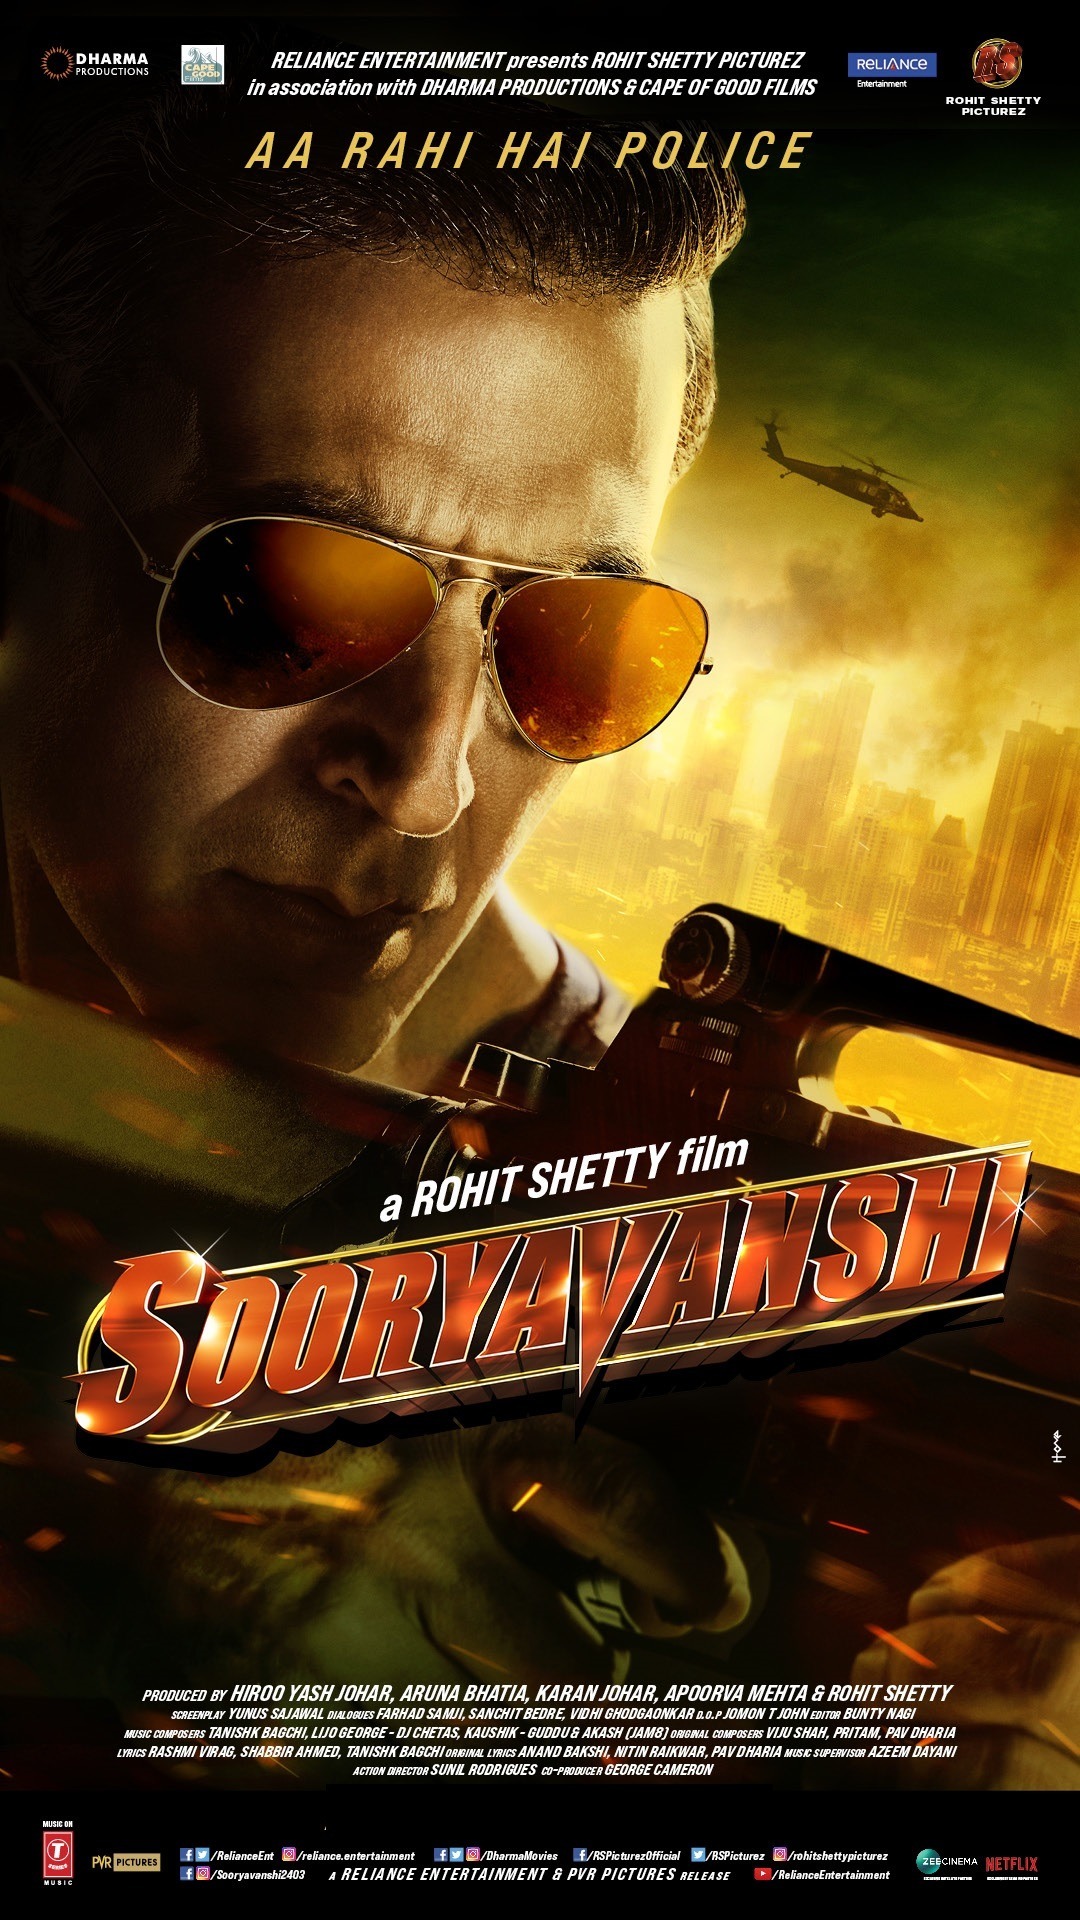 Sooryavanshi Movie Review, Trailer, Cast, Photo Download 2021👍